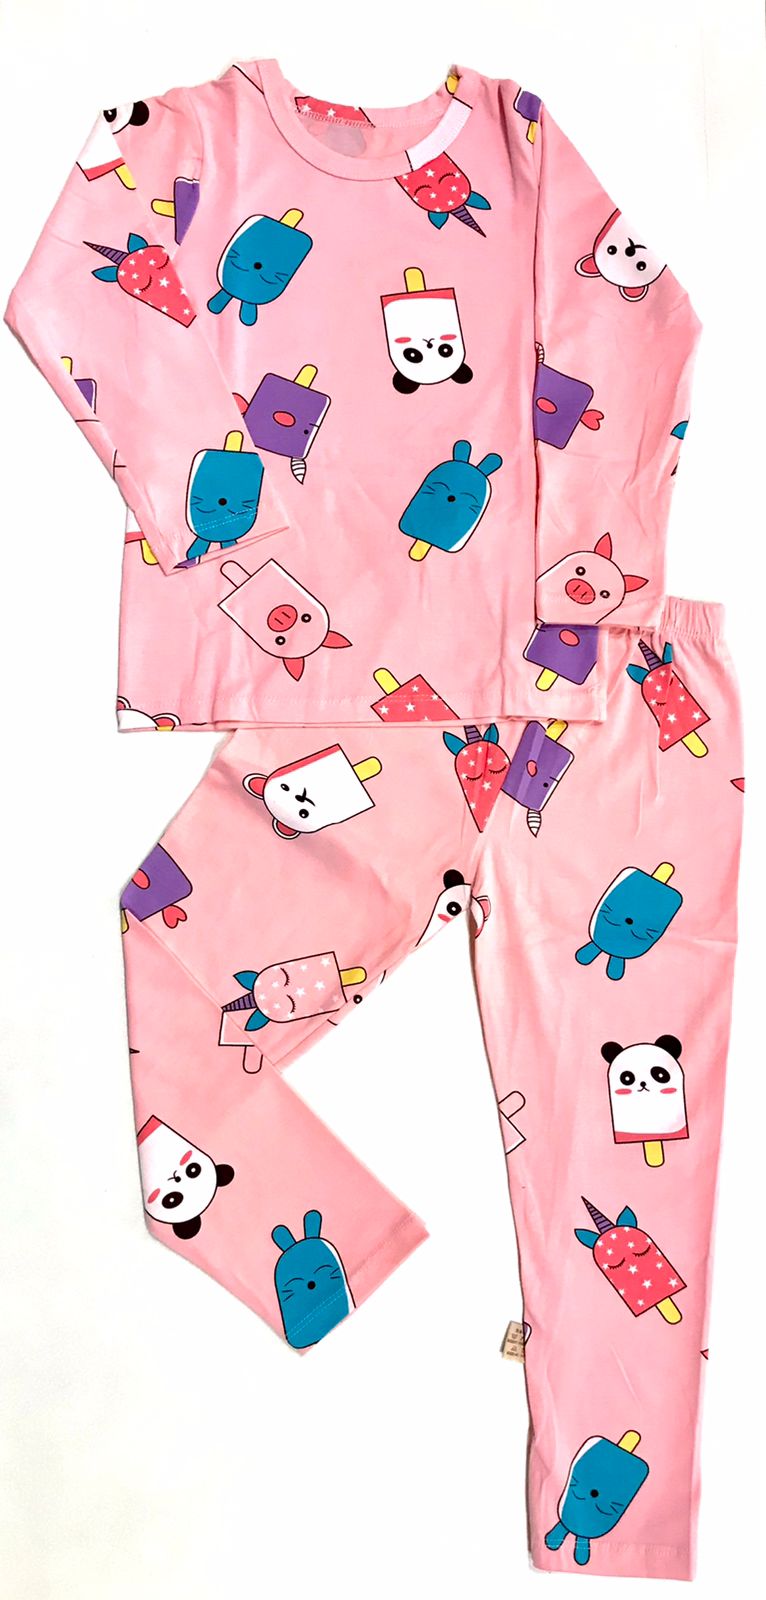 Colorful Patterns Children's Sleepwear Pajama Popsicles Pink